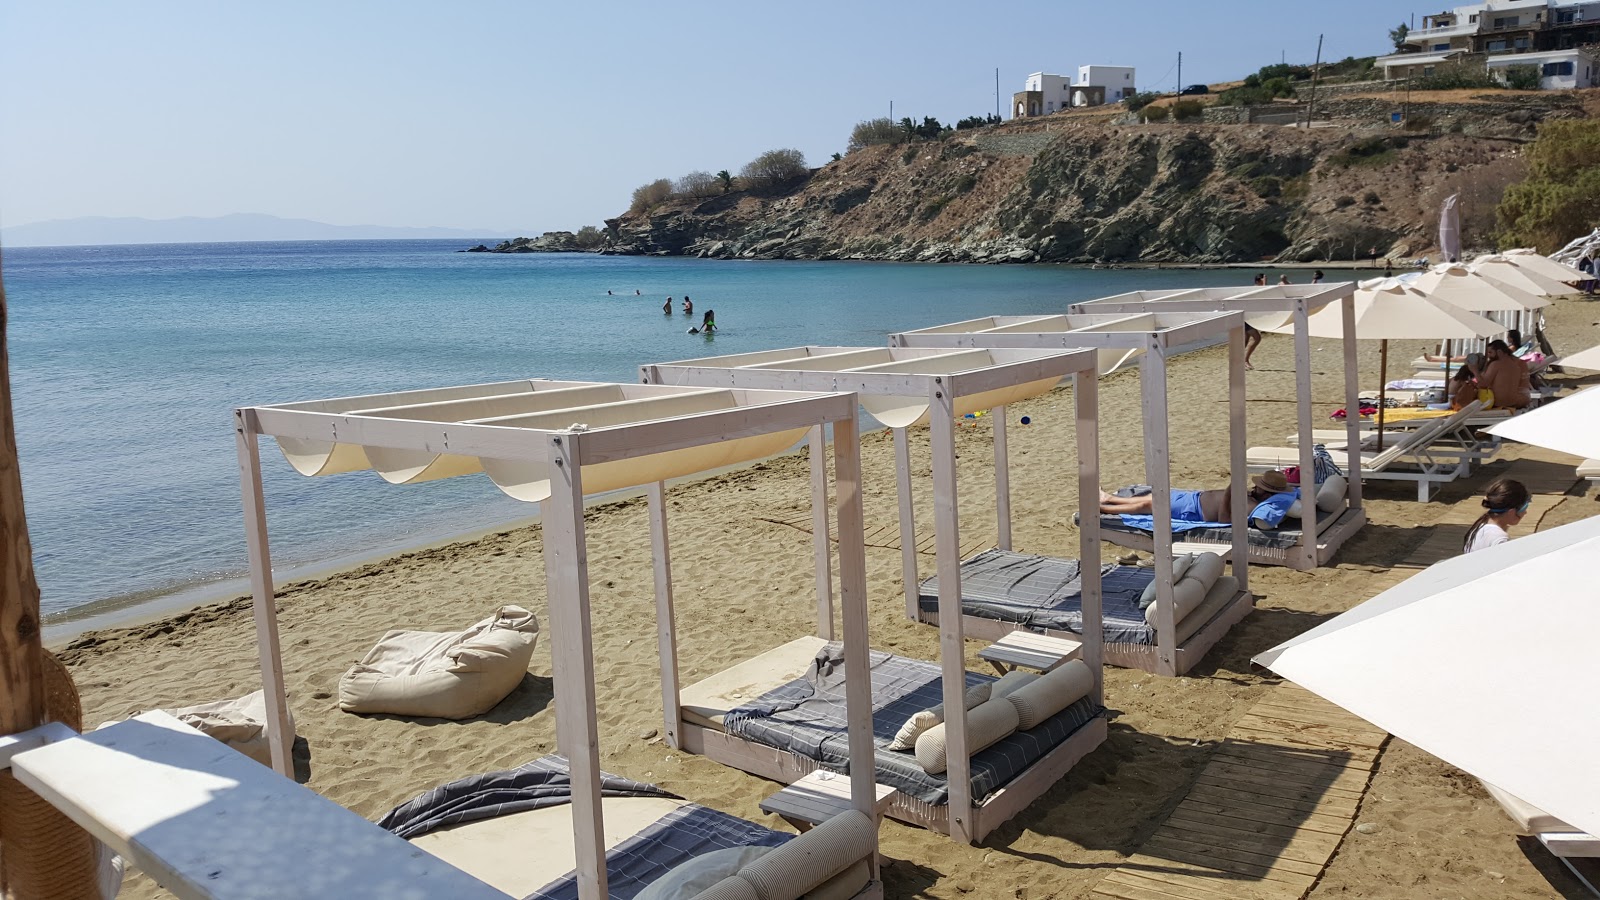 Photo of Agios Romanos beach - popular place among relax connoisseurs